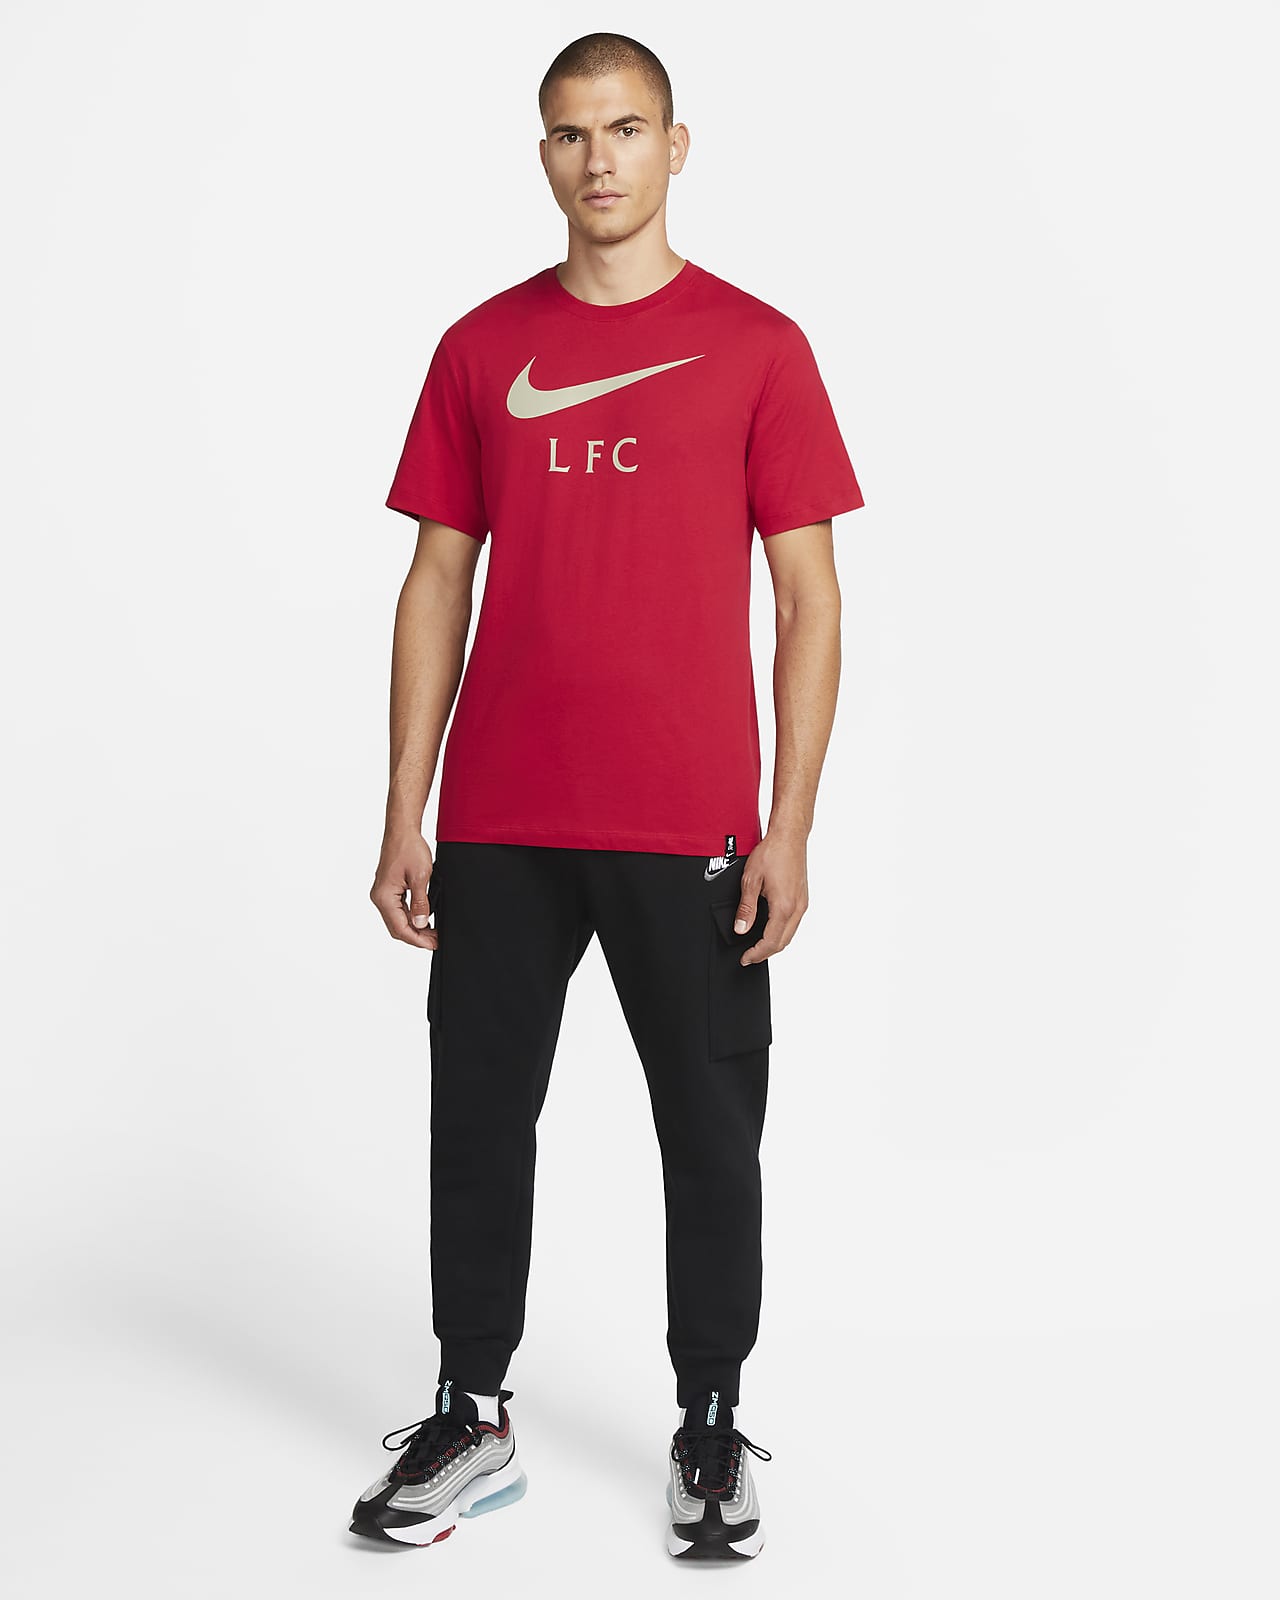 Taktil sans kuvert Compulsion Liverpool FC Men's Soccer T-Shirt. Nike.com